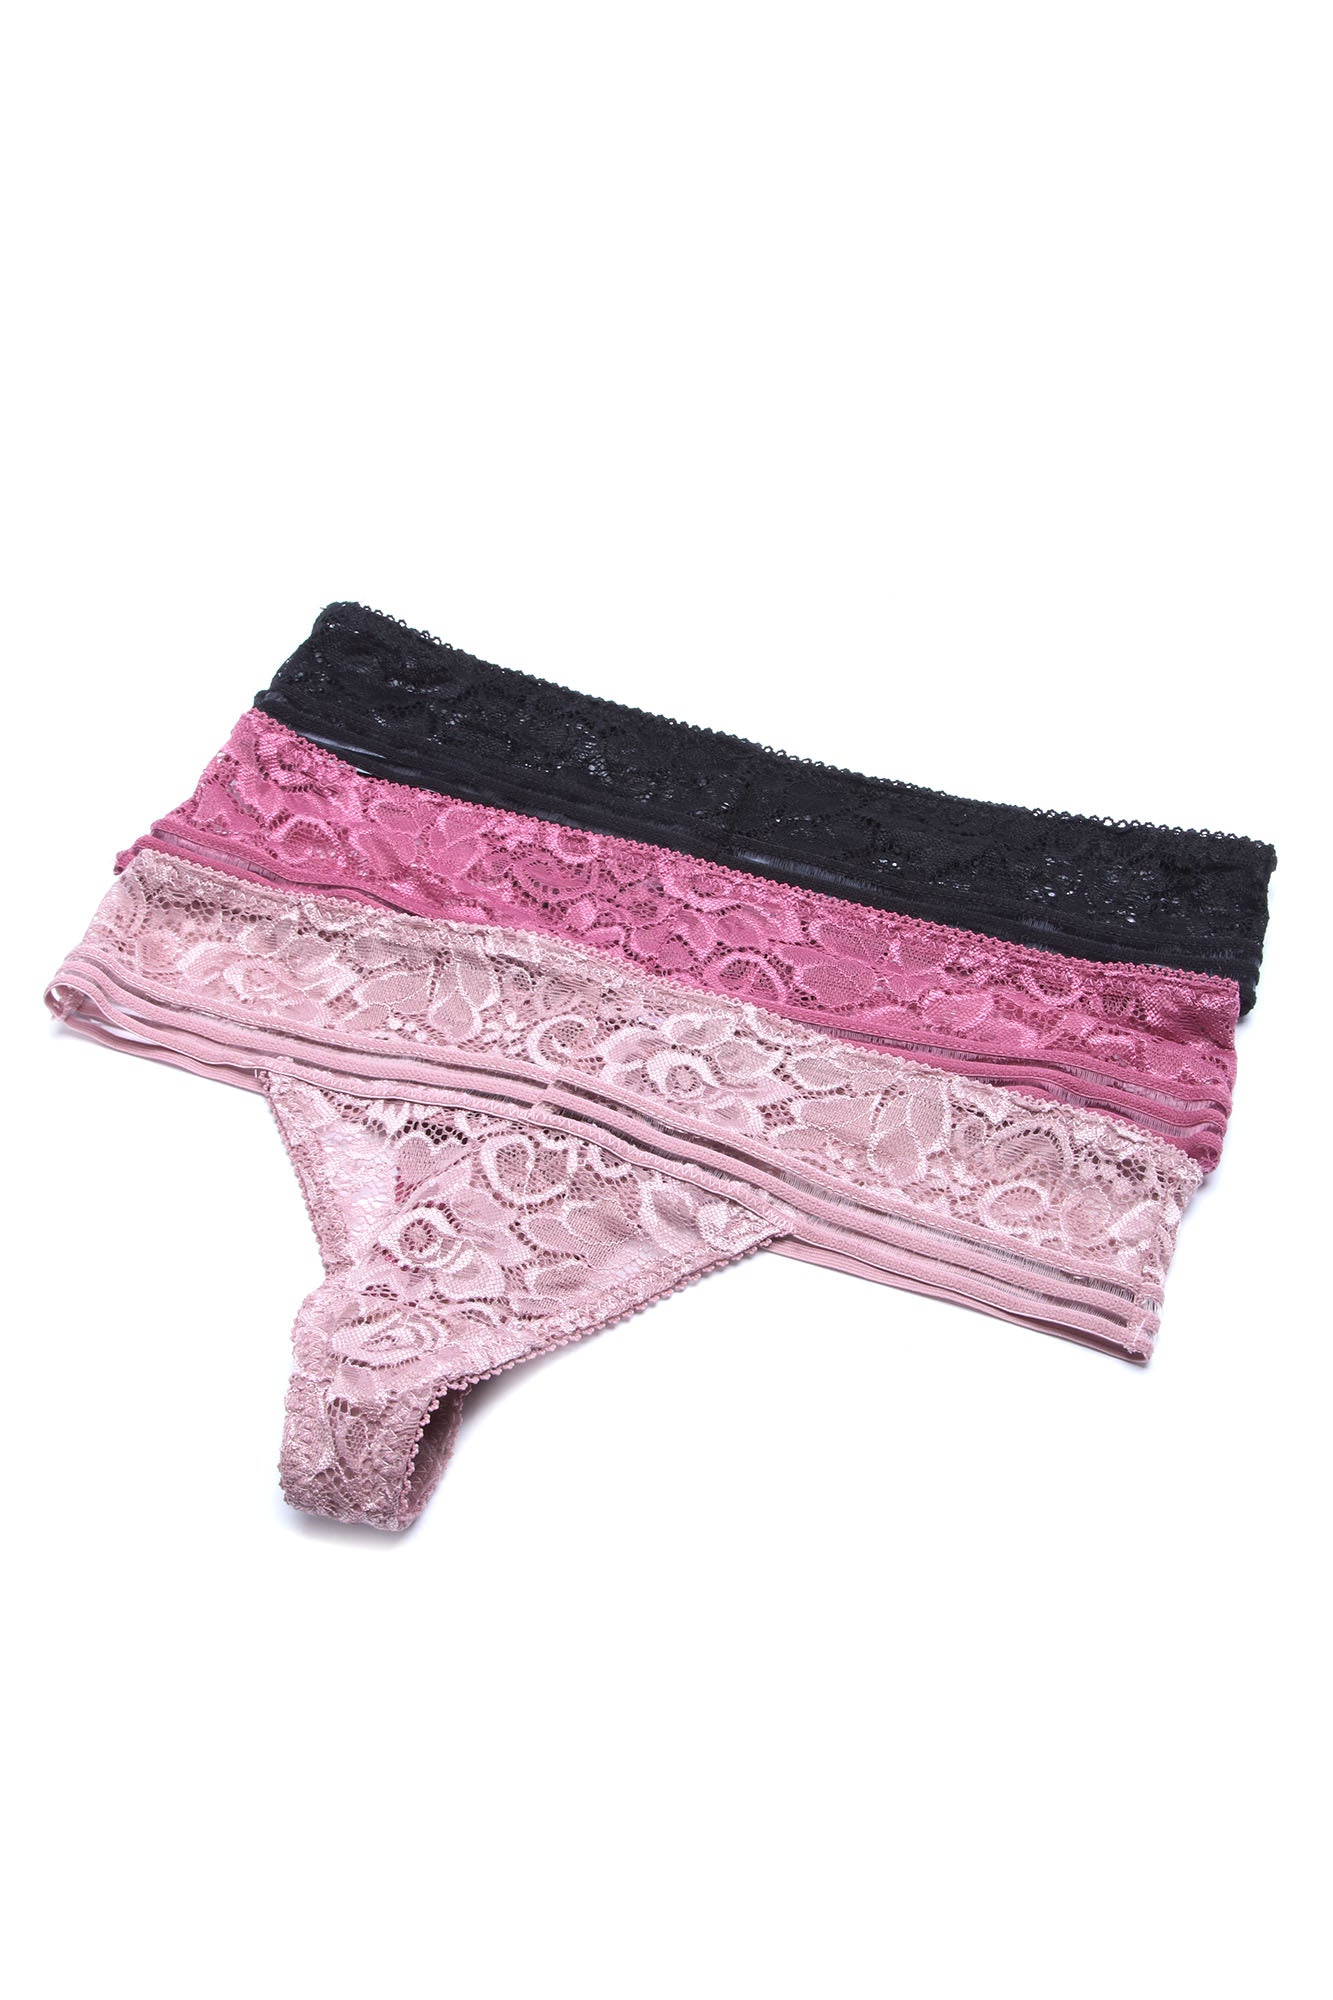 Come A Little Closer 3 Pack Cheeky Panties - Mauve/combo, Fashion Nova,  Lingerie & Sleepwear